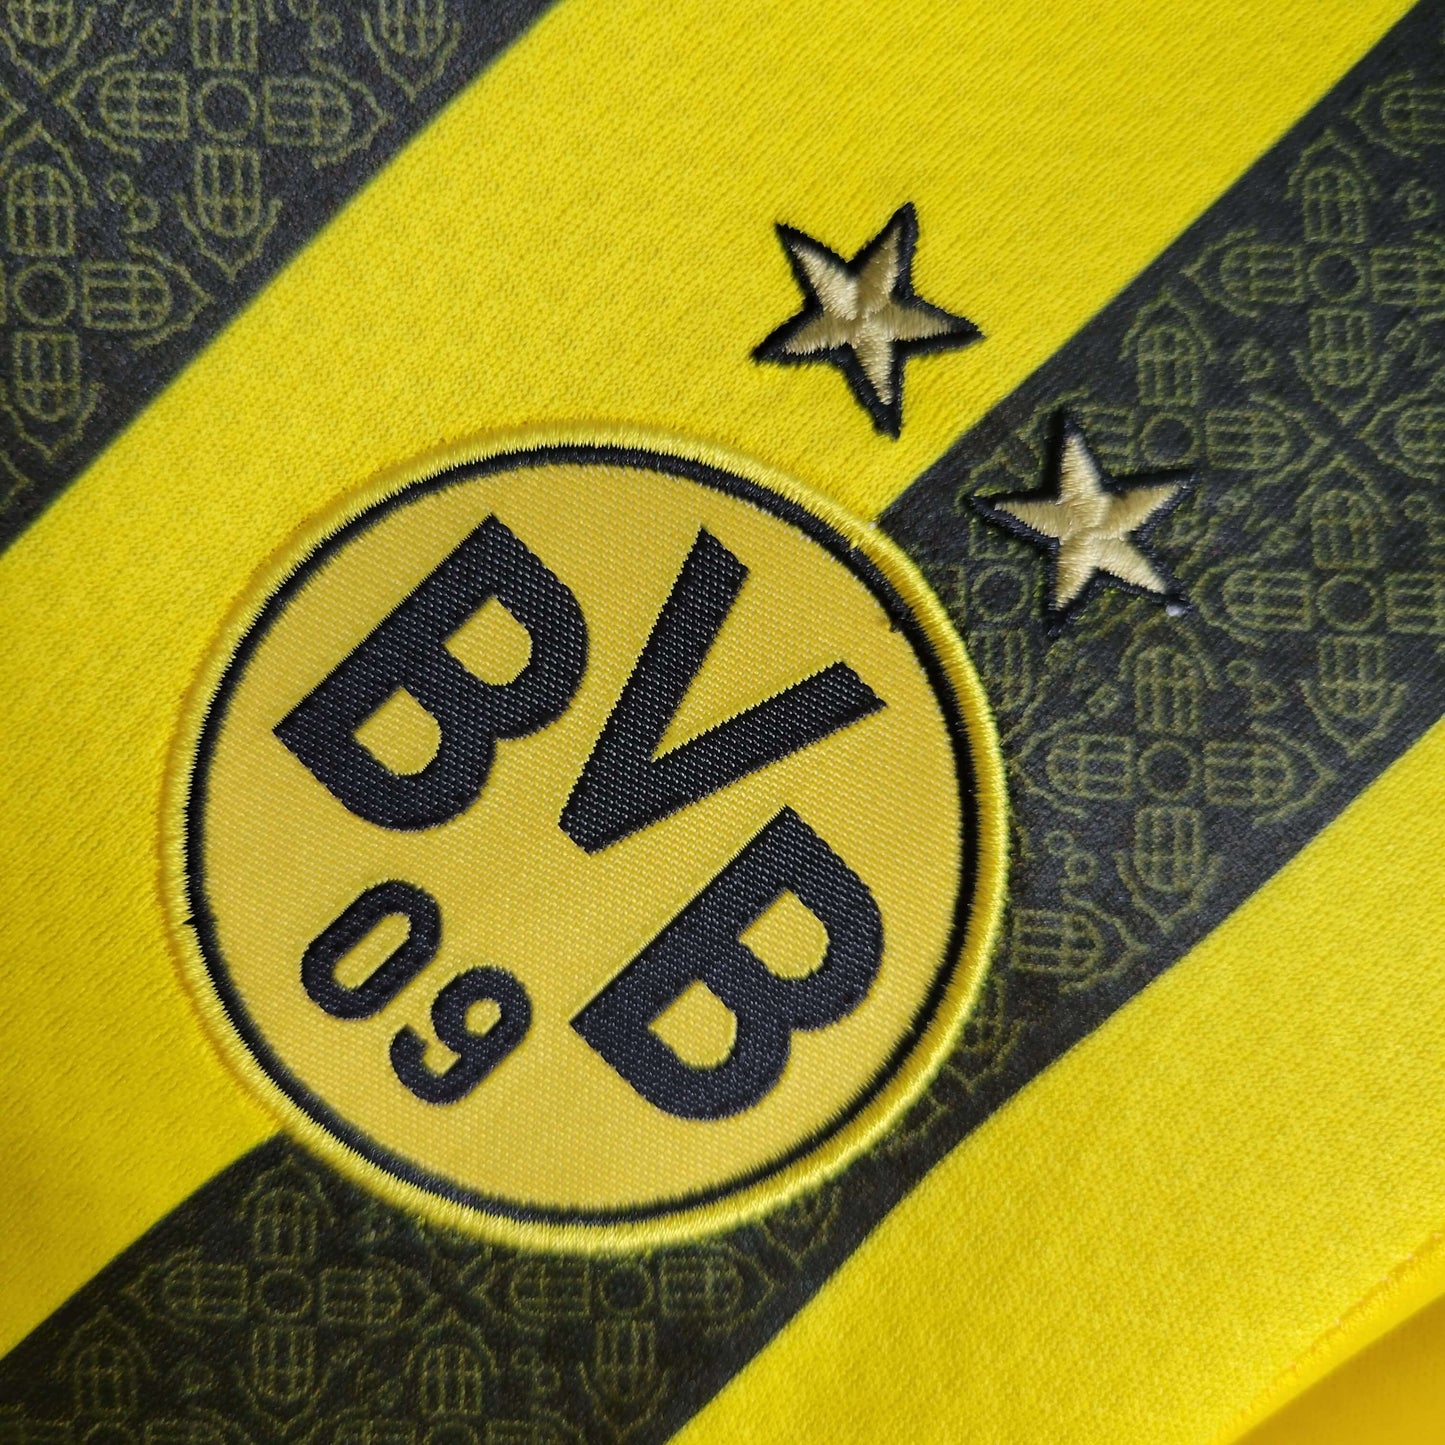 Kit Infantil Borussia Dortmund I 22/23 Unissex - Amarelo+Preto